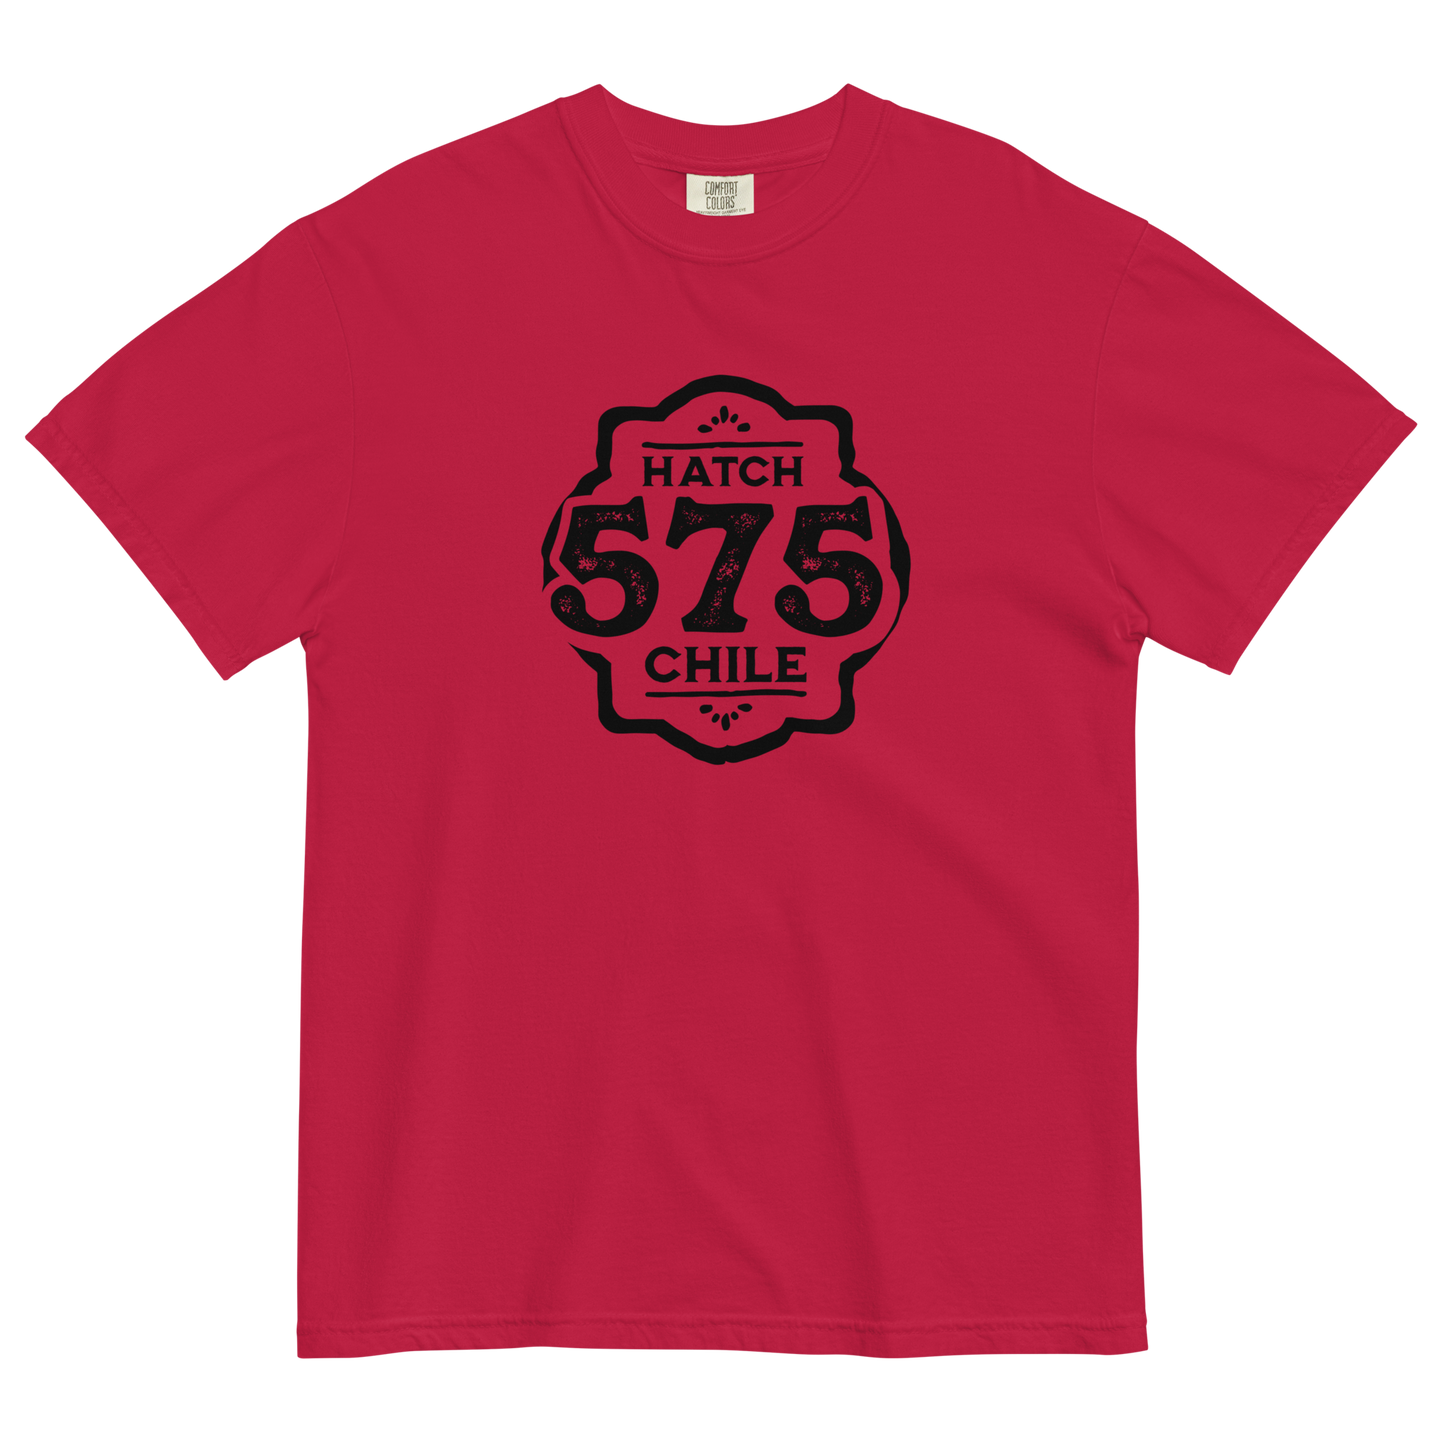 575 Hatch Chile 100% Cotton Heavyweight T-shirt